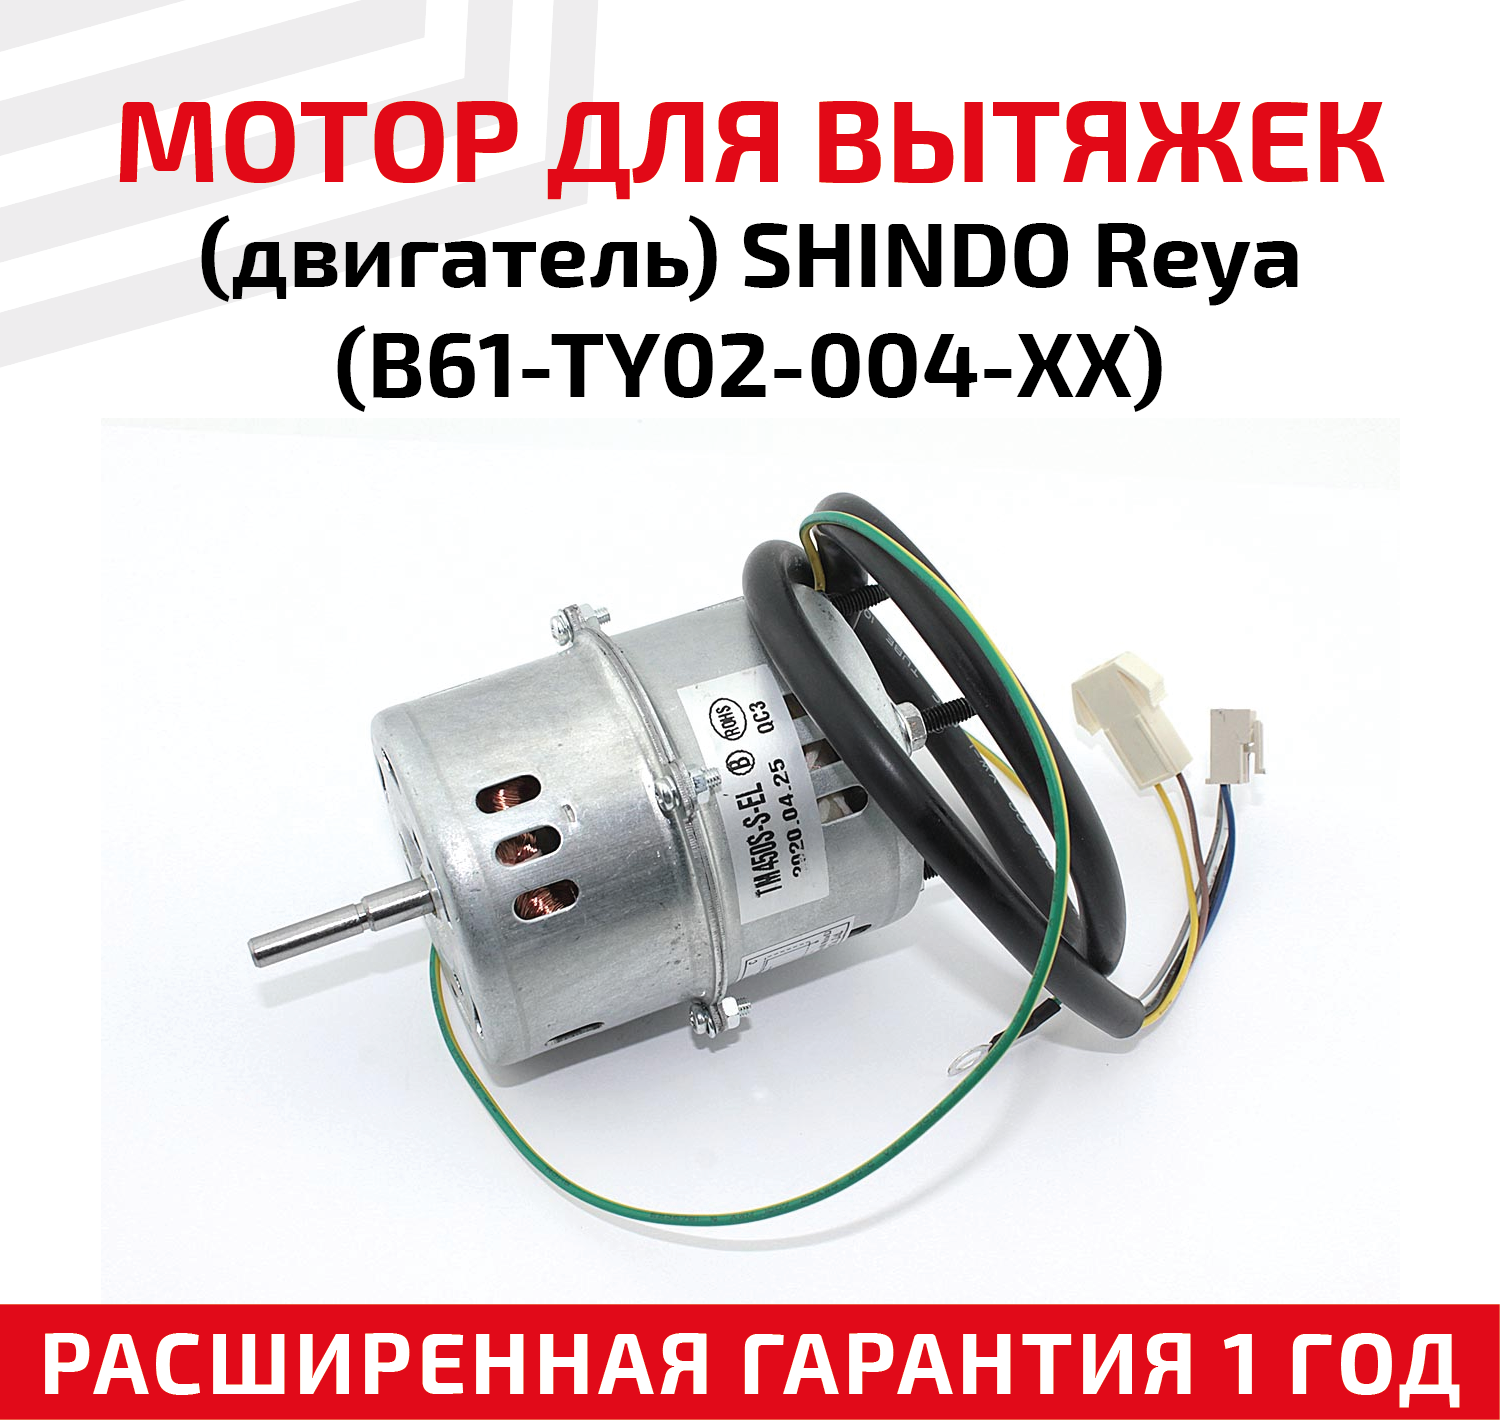 Мотор для кухонных вытяжек Shindo Reya (B61-TY02-004-XX)